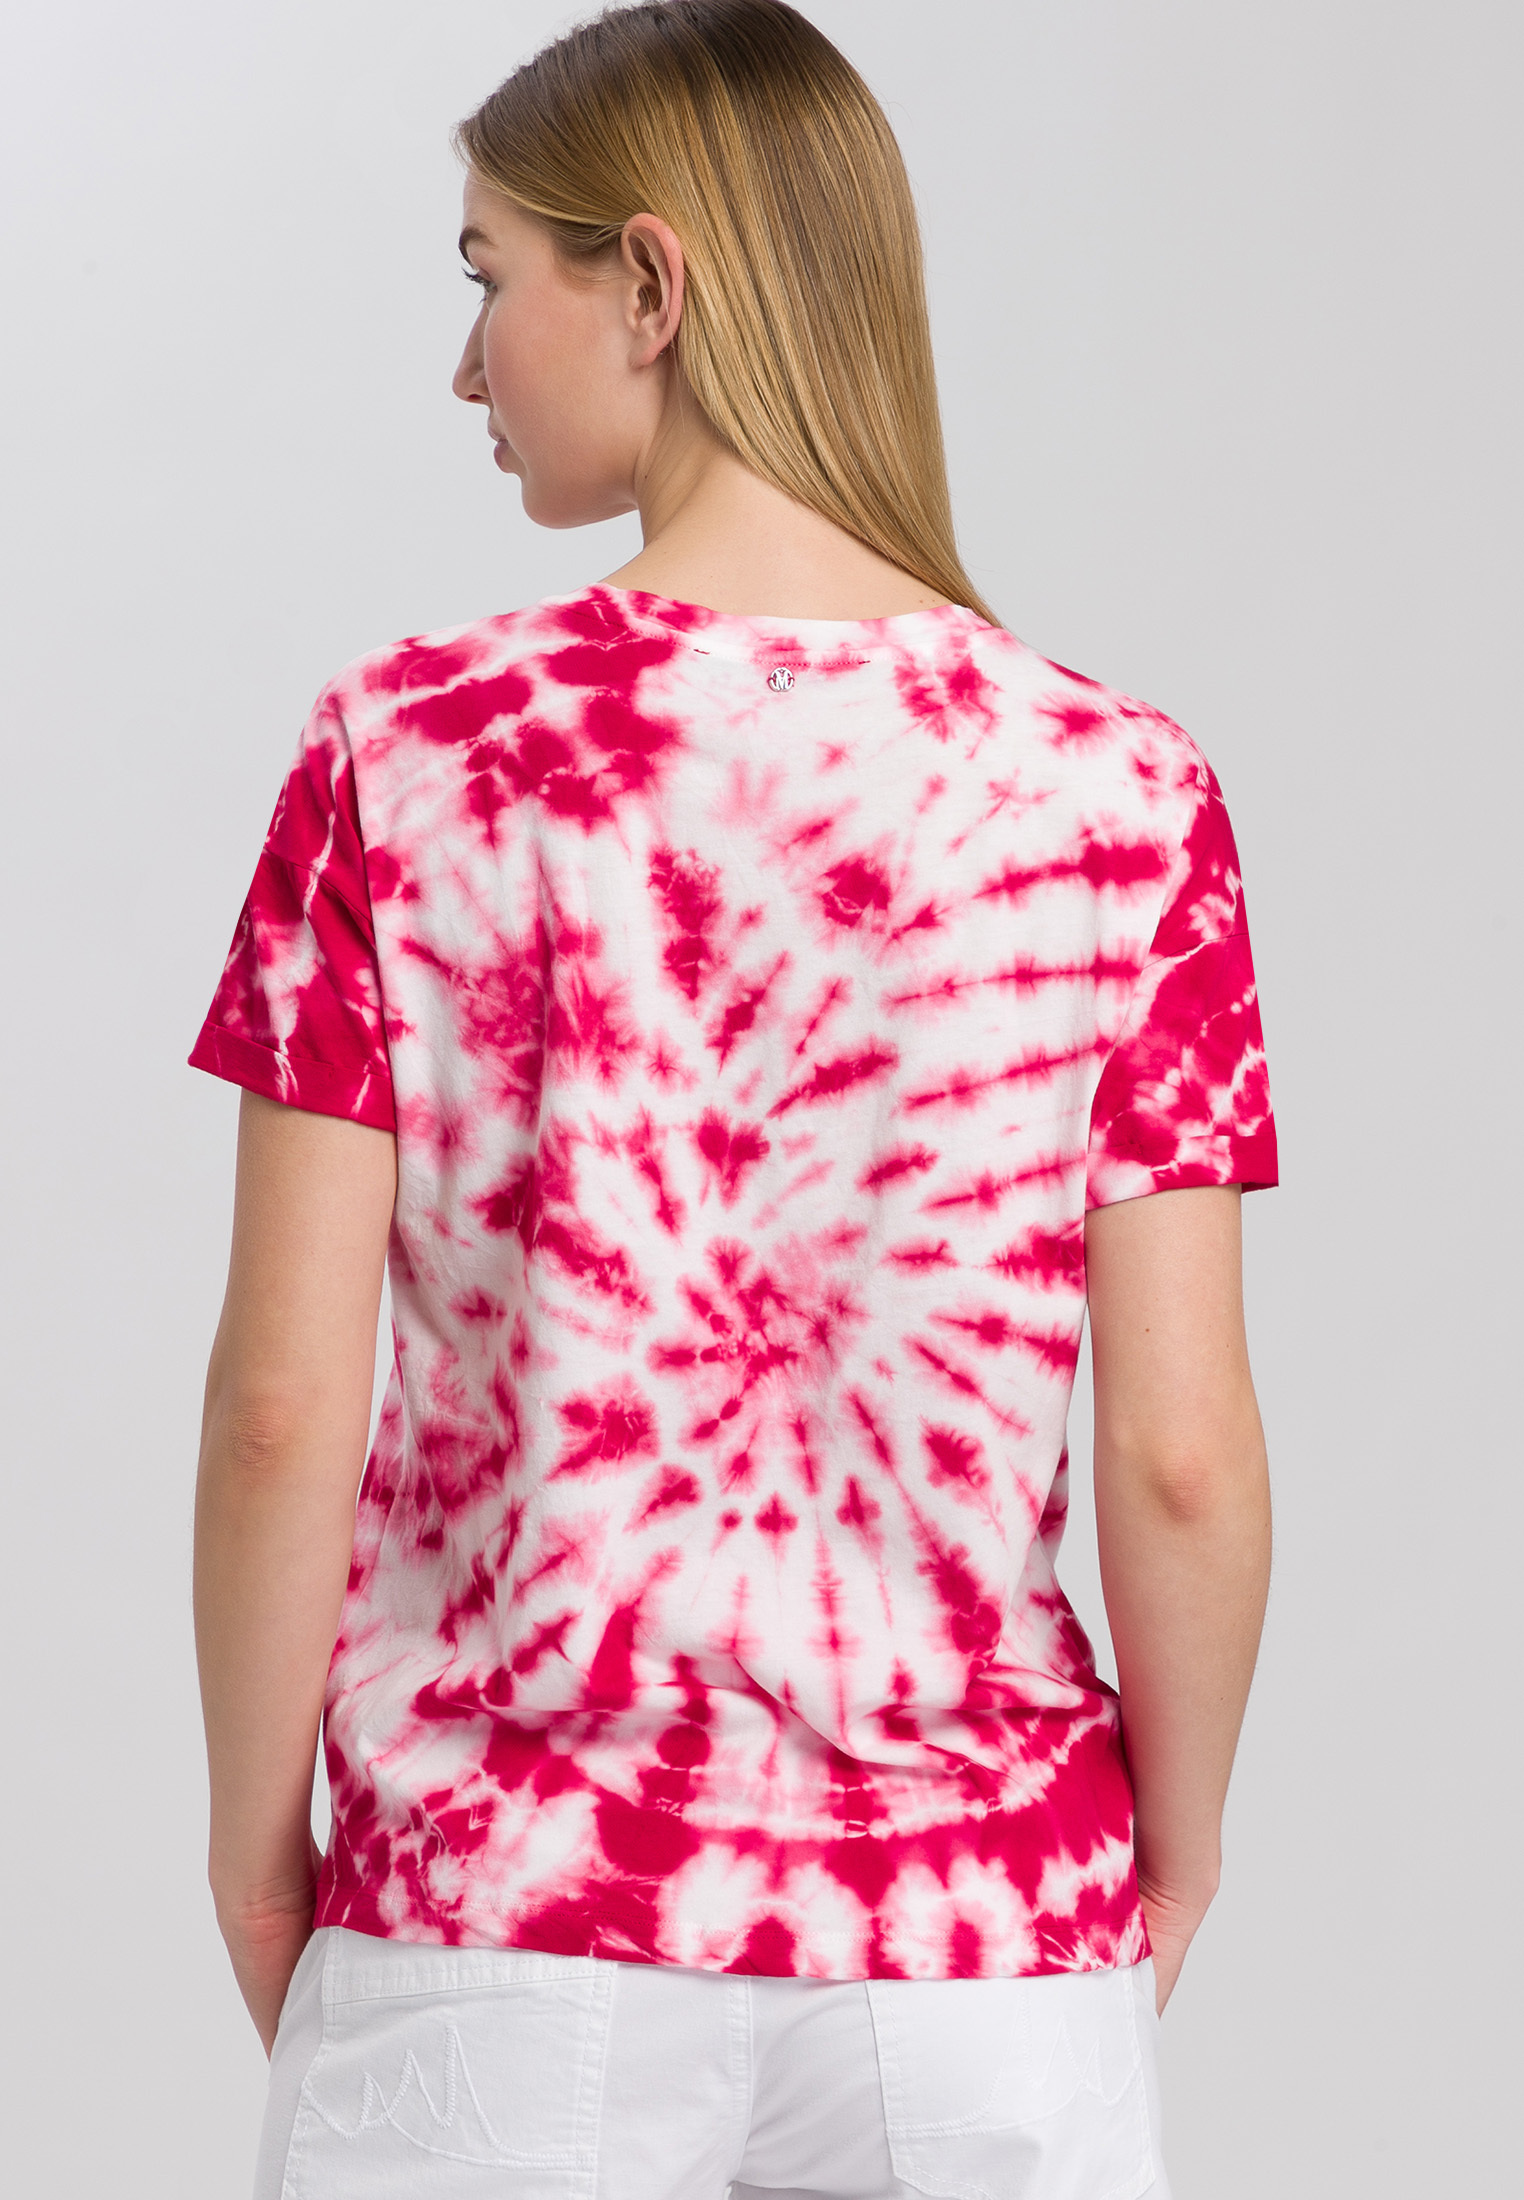 T-shirt with batik pattern and embroidery | Shirts | Fashion